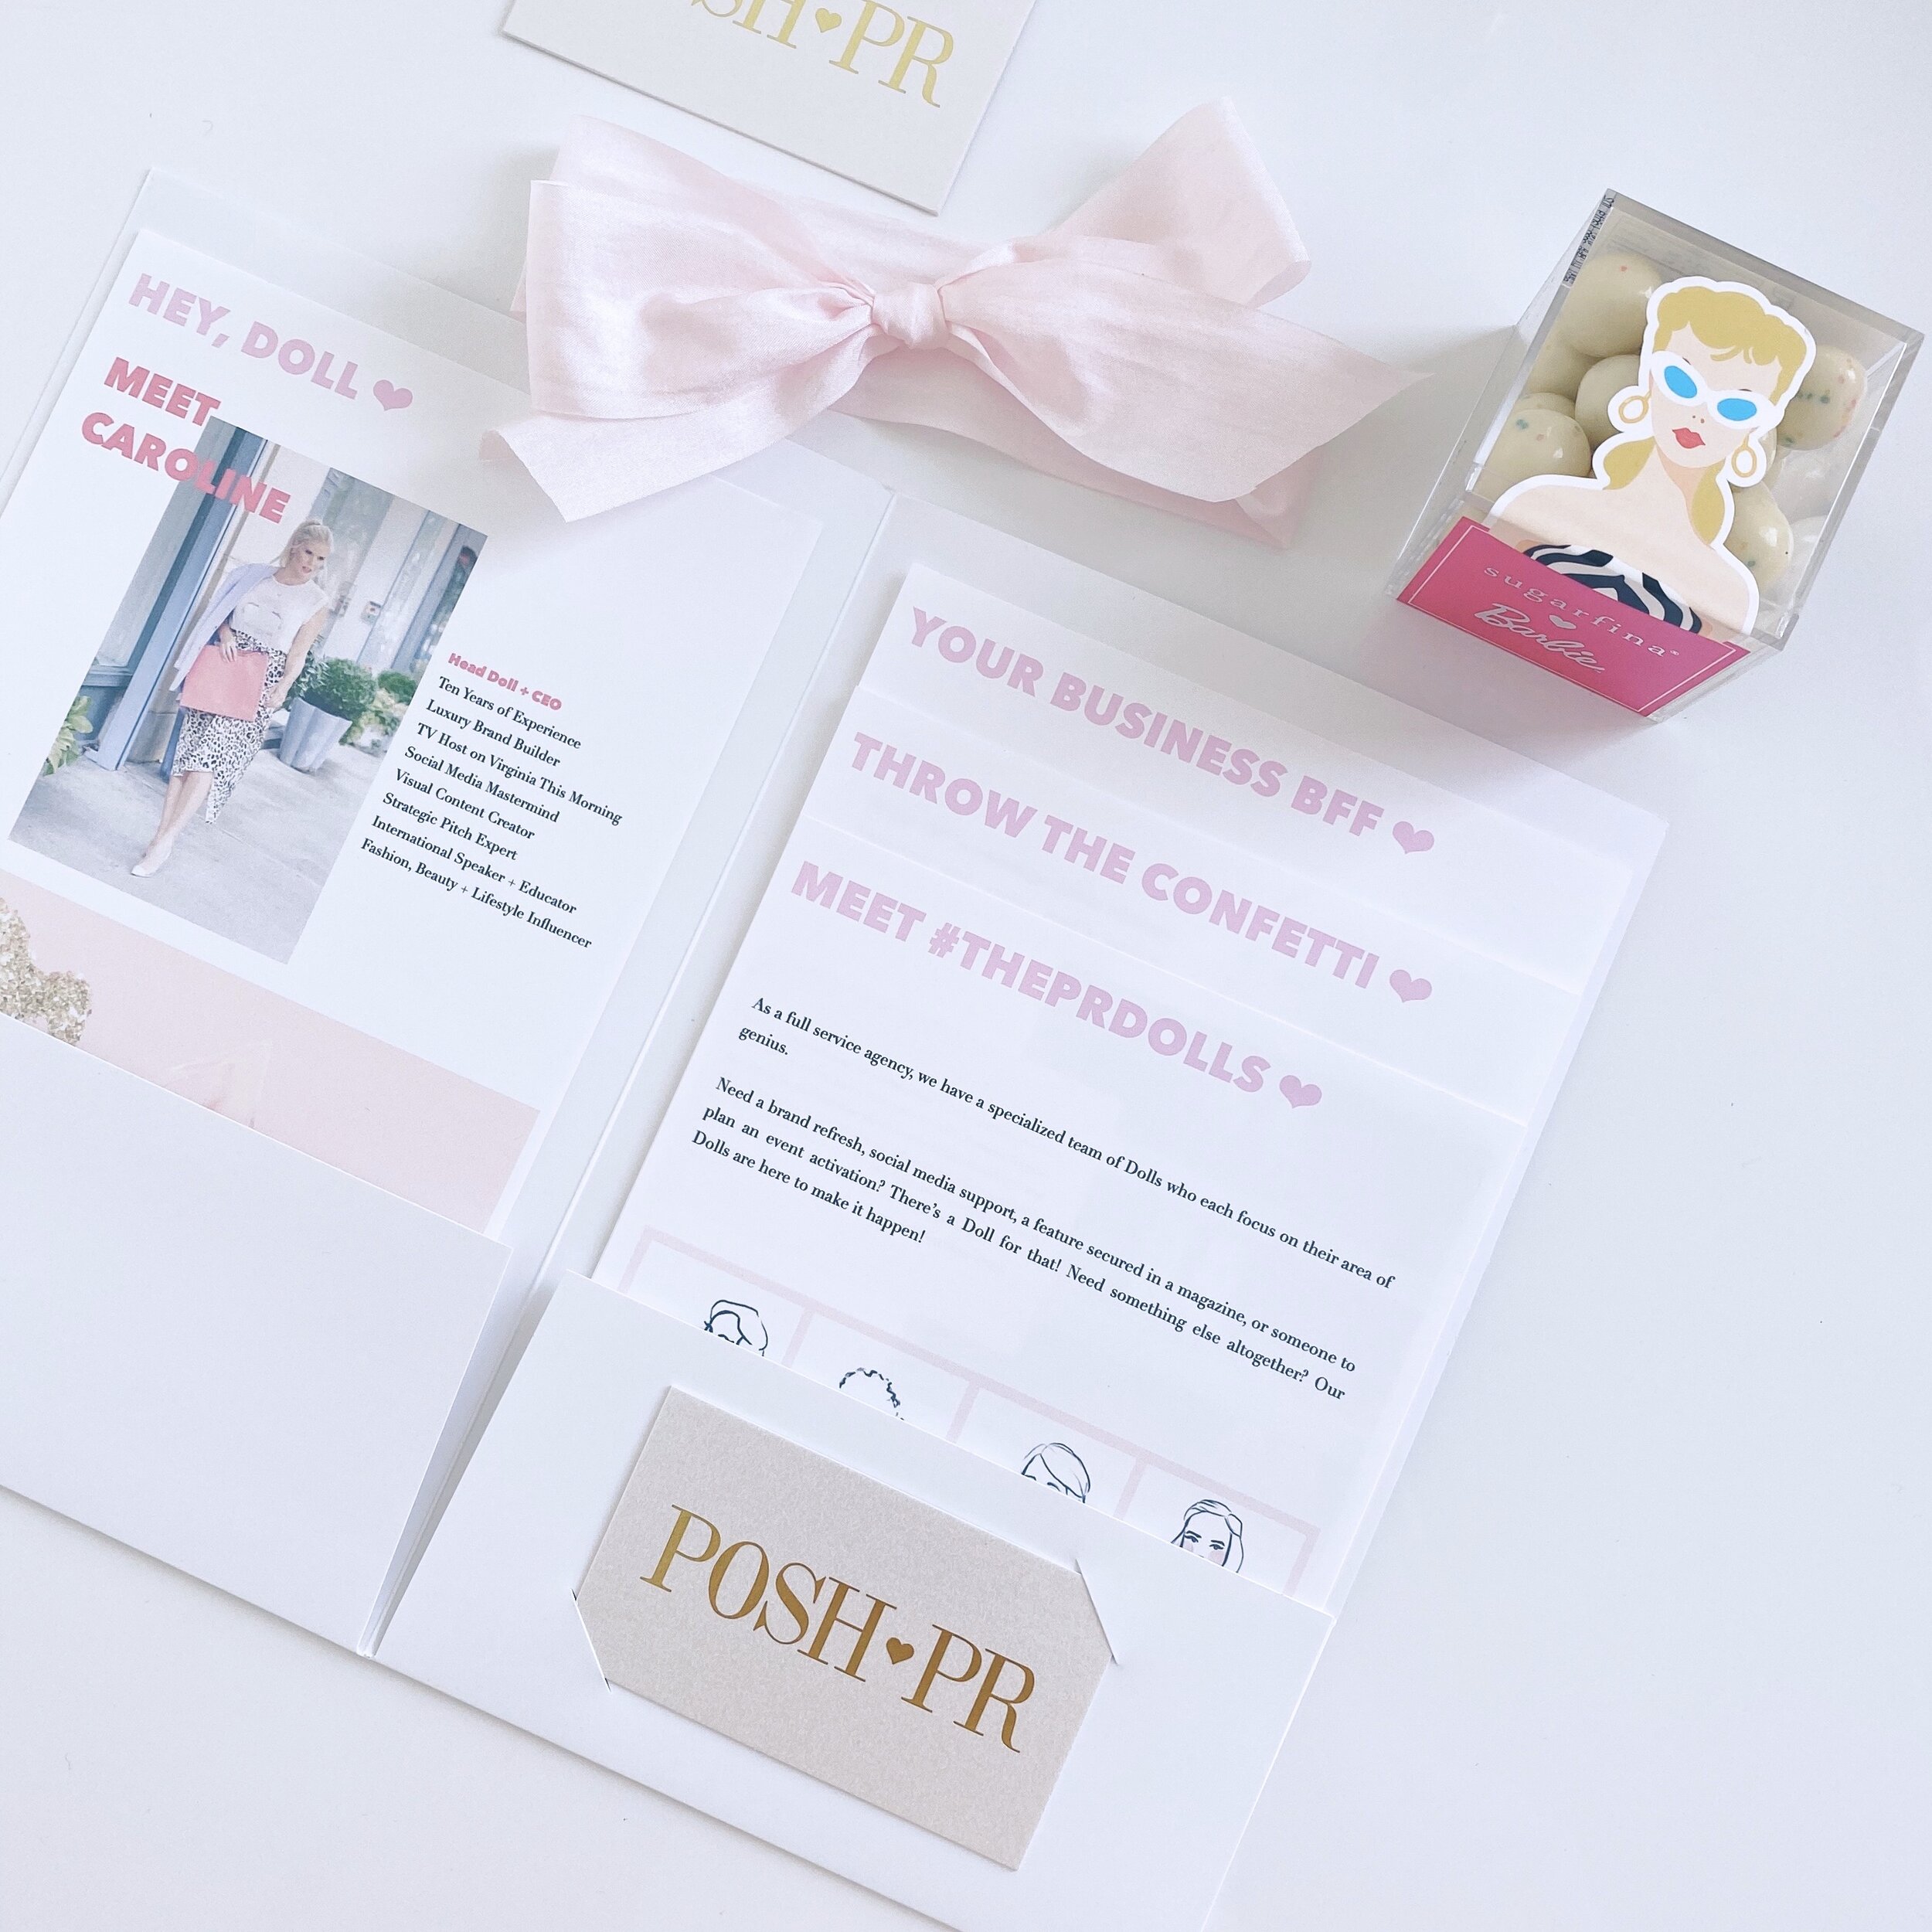 POSH-PR-Blog-Press-Kit-Pretty-Pink-Packages-Elevated-Details-Champagne-Sugarfina-Bows-Social-Media-Agency-Luxury-Branding-Branded-Packing-5.JPG